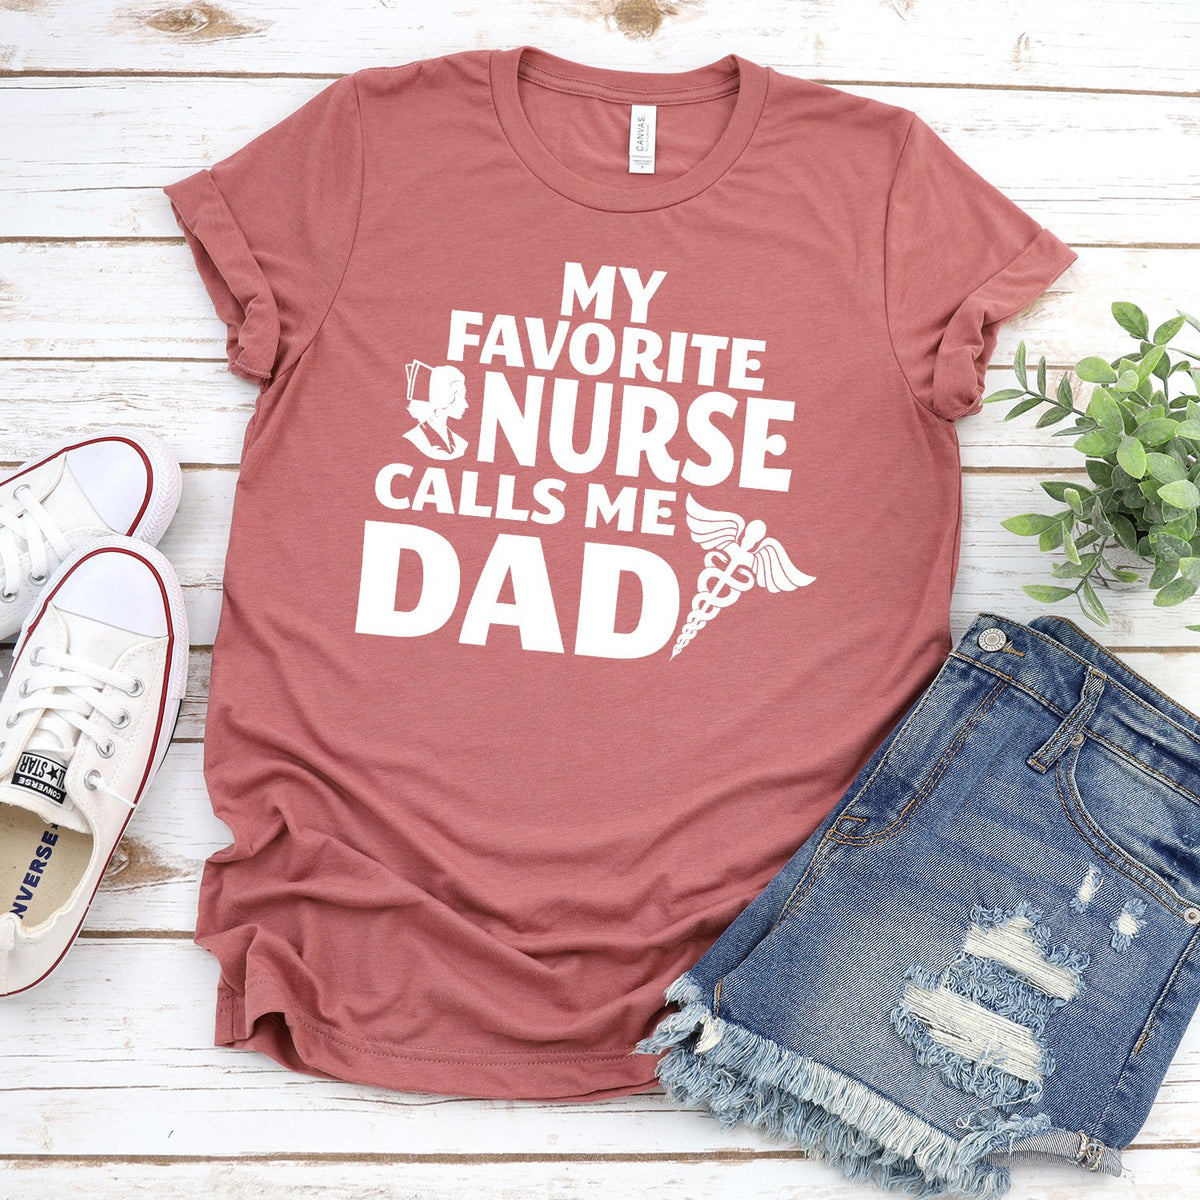 My Favorite Nurse Calls Me Dad - Short Sleeve Tee Shirt